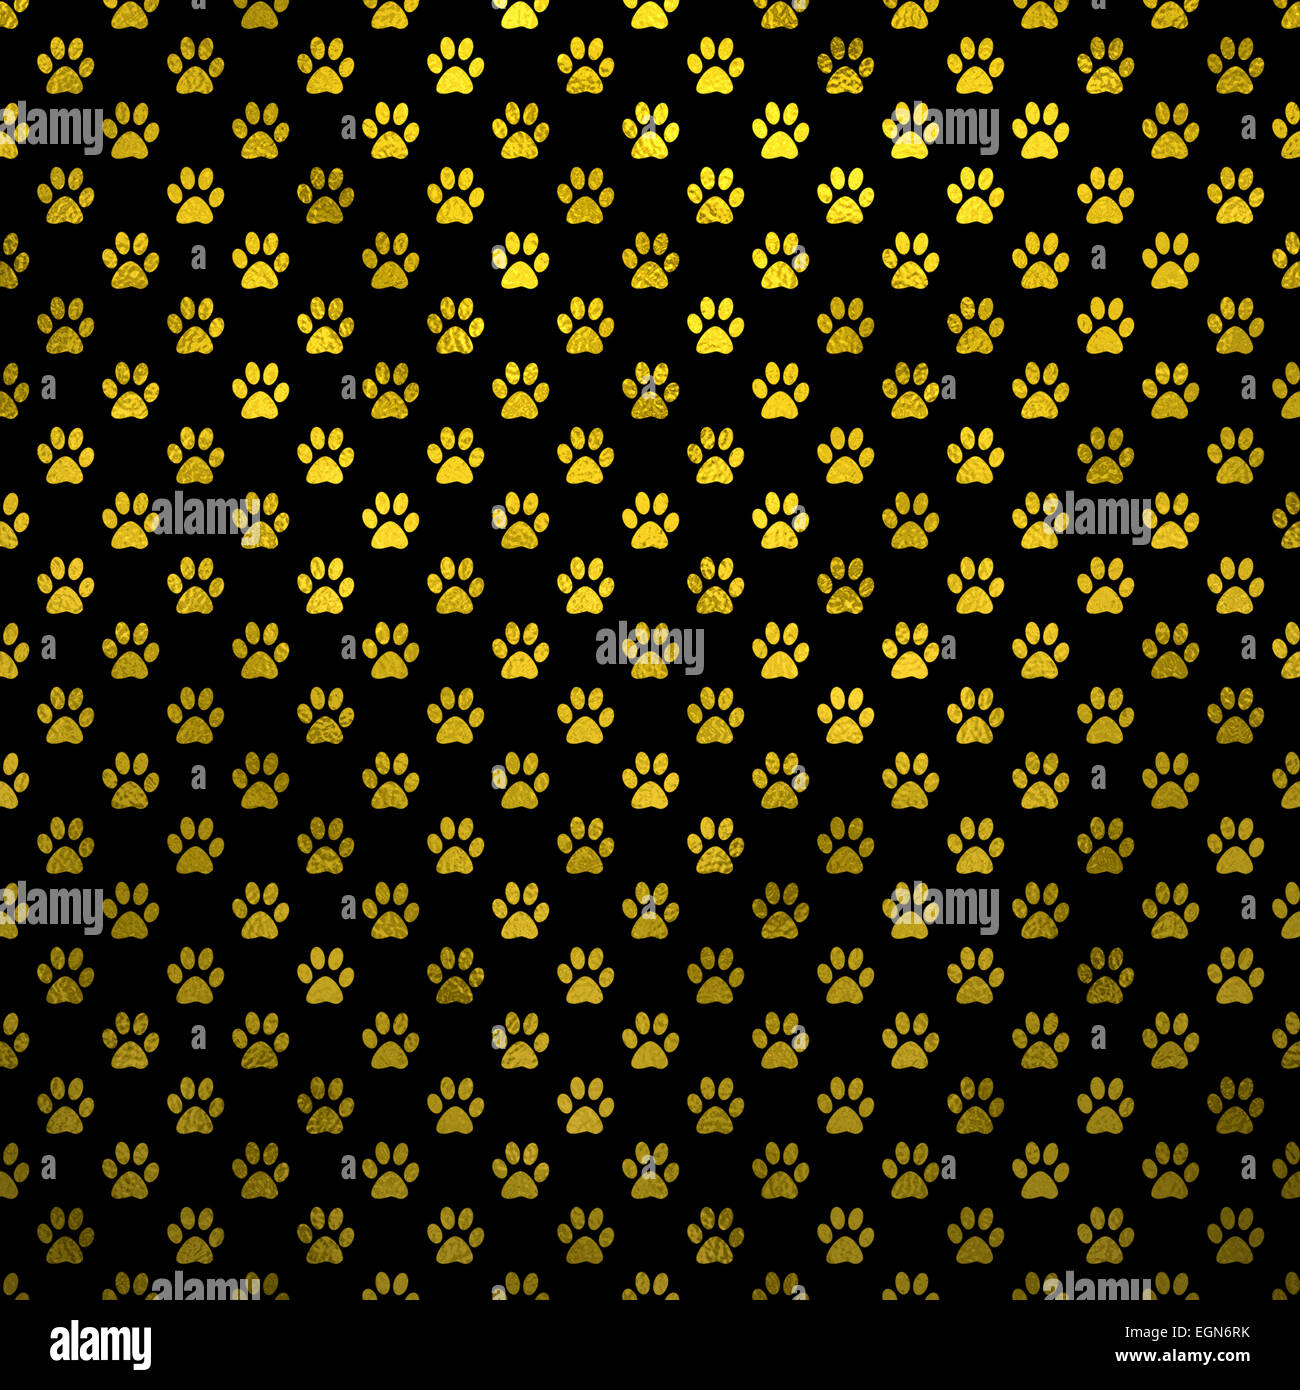 Dog Paws Gold Black Metallic Foil Polka Dot Texture Background Pattern Stock Photo